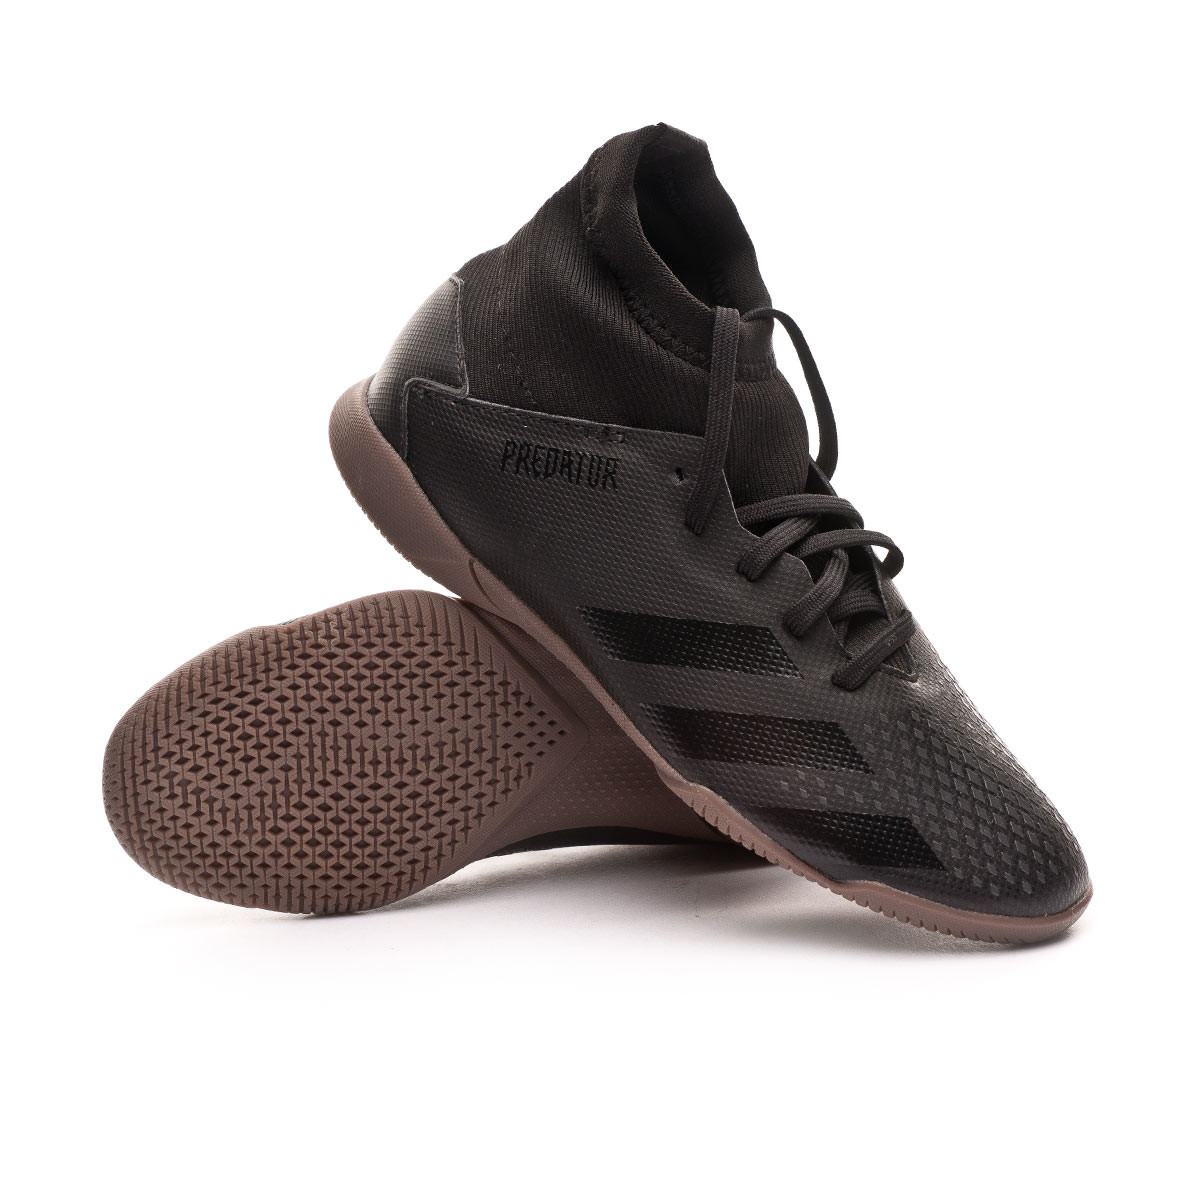 adidas predator 20.3 indoor soccer shoes